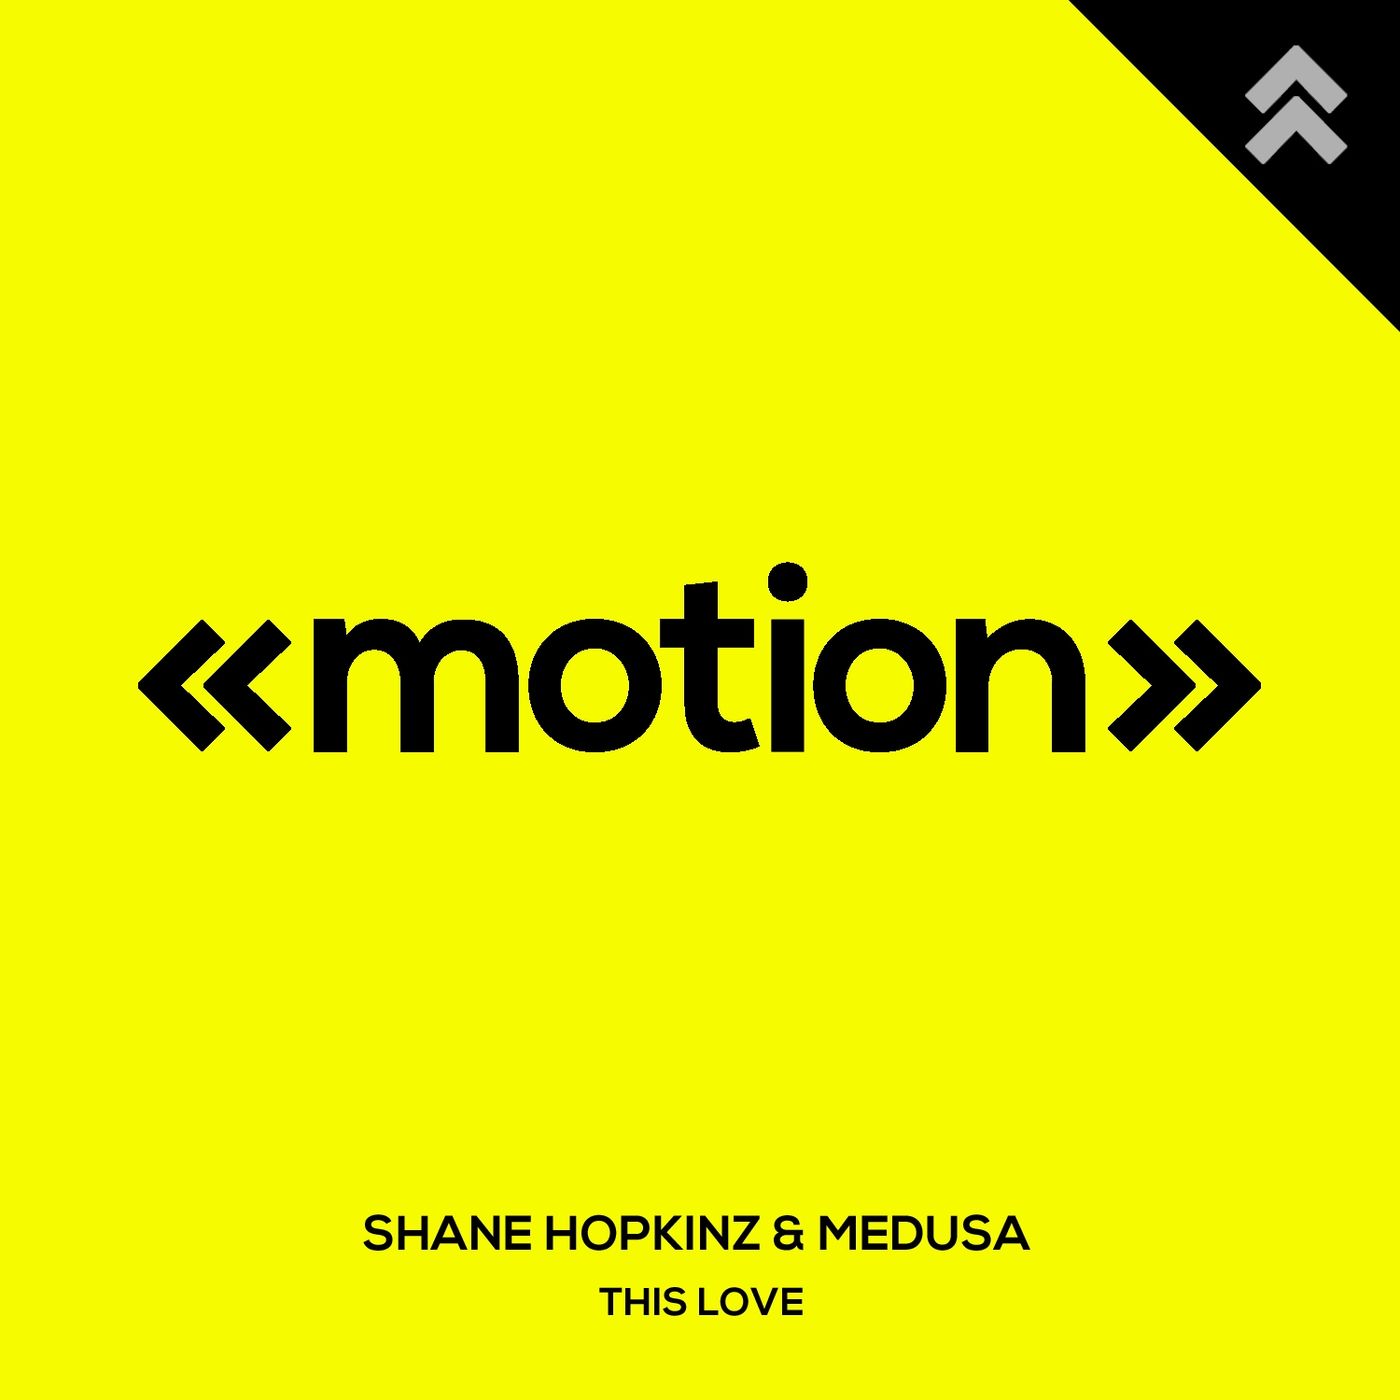 Shane Hopkinz & Medusa - This Love / motion